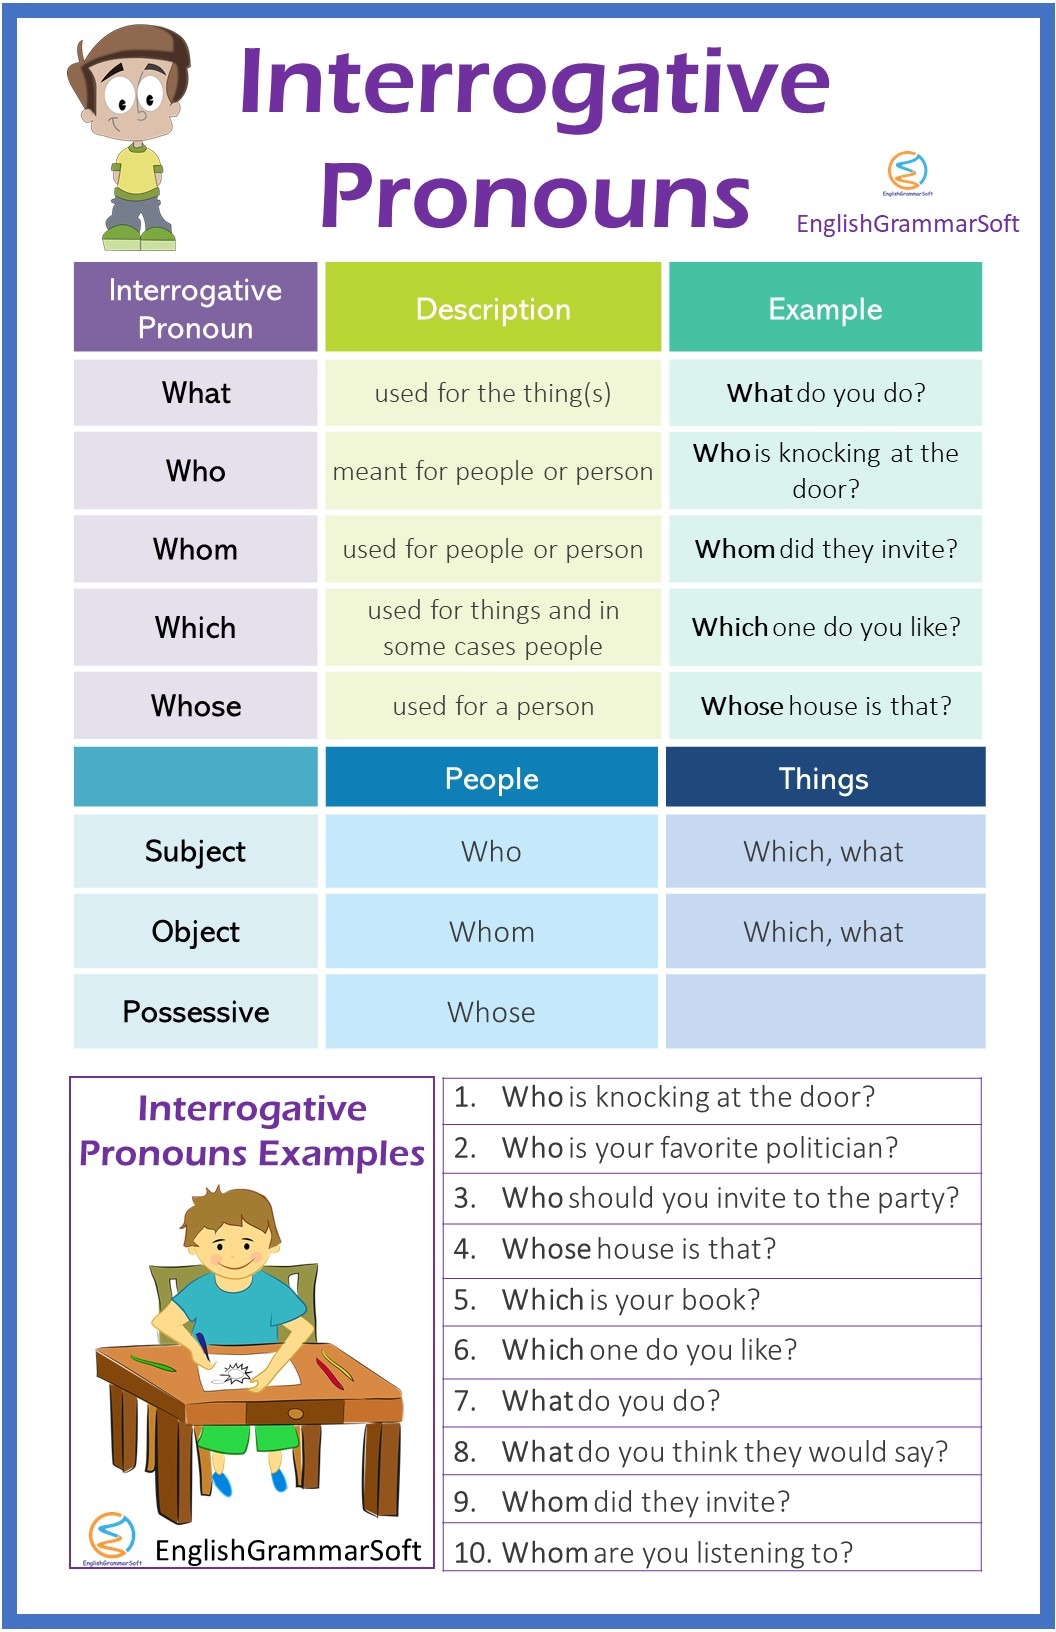 Interrogative Pronouns Examples and Charts